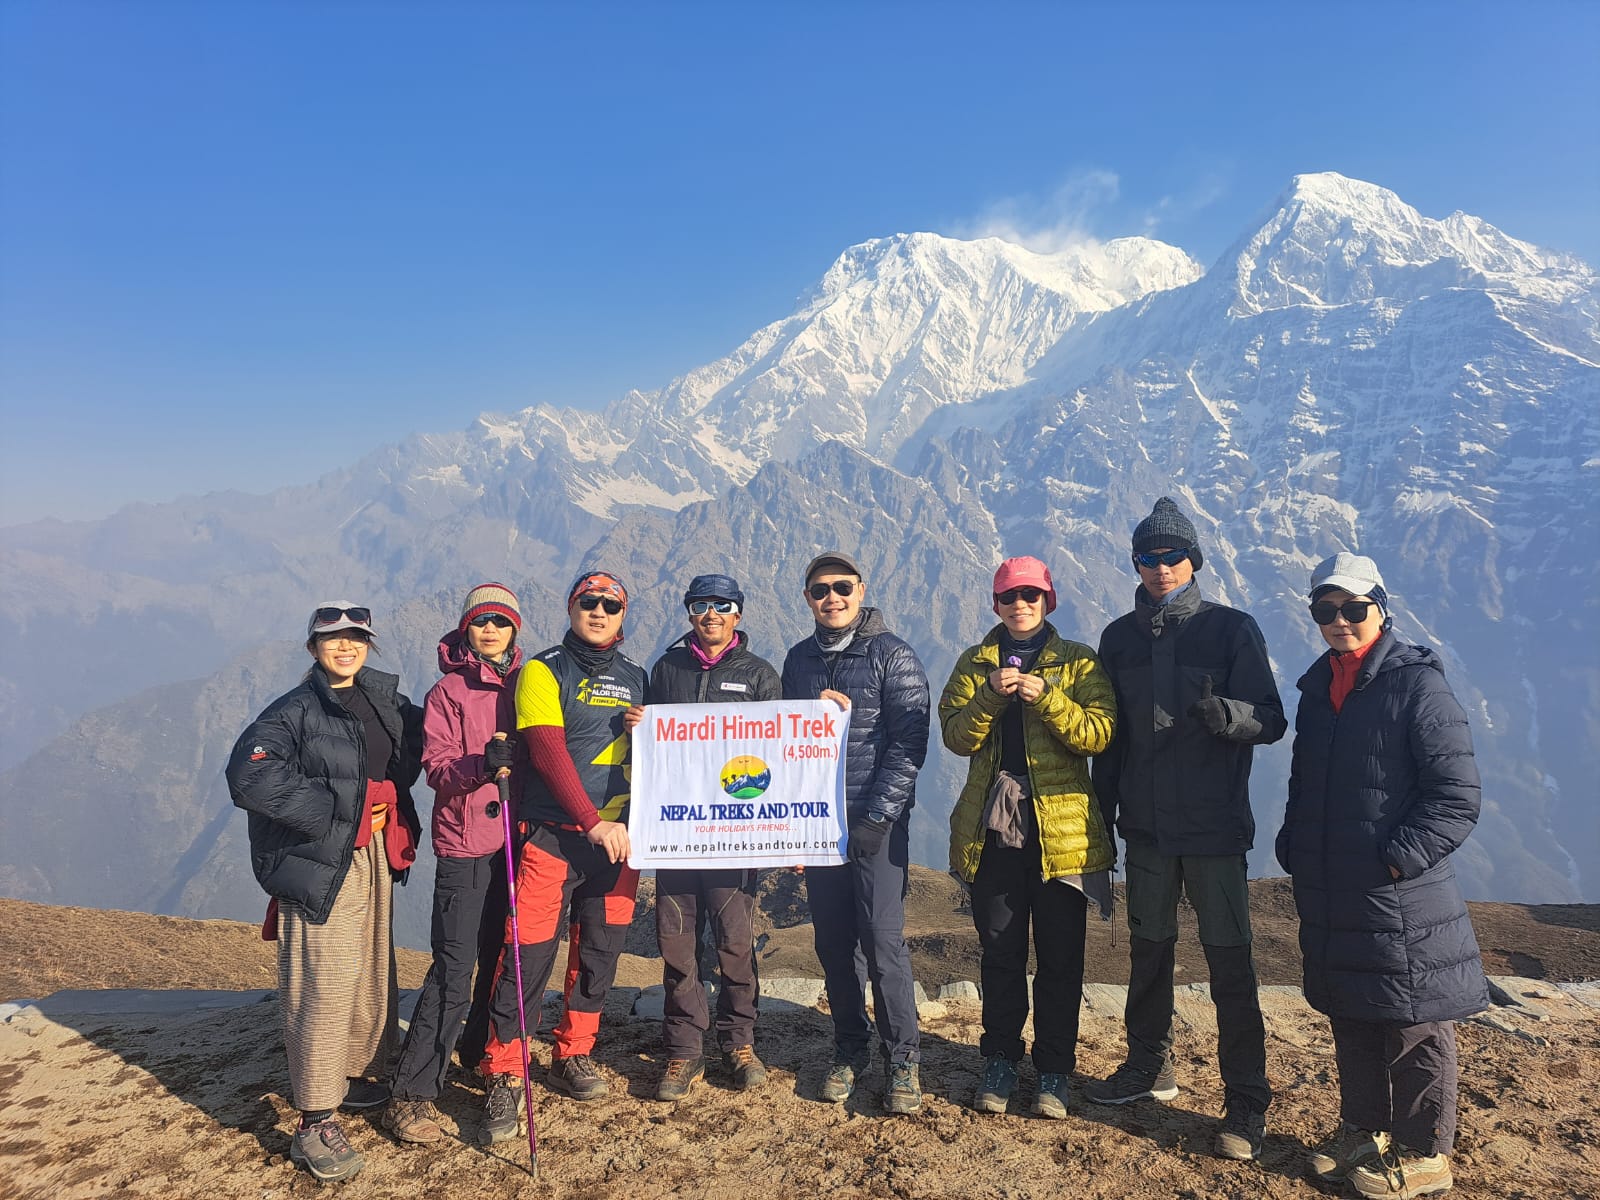 Ghorepani Poon Hill with Mardi Himal Trek